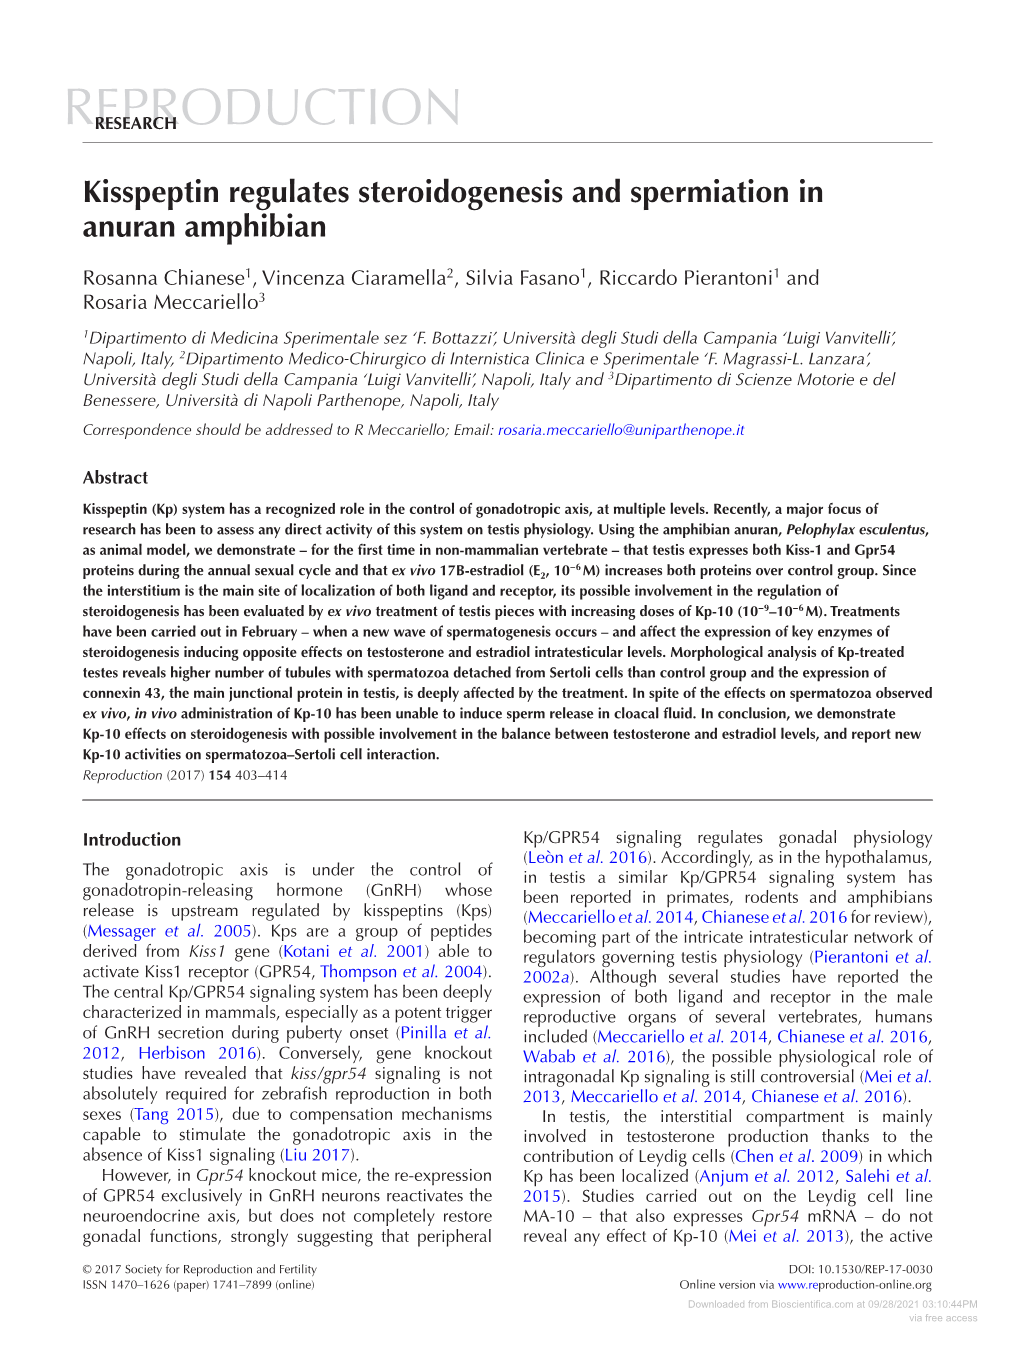 Kisspeptin Regulates Steroidogenesis and Spermiation in Anuran Amphibian